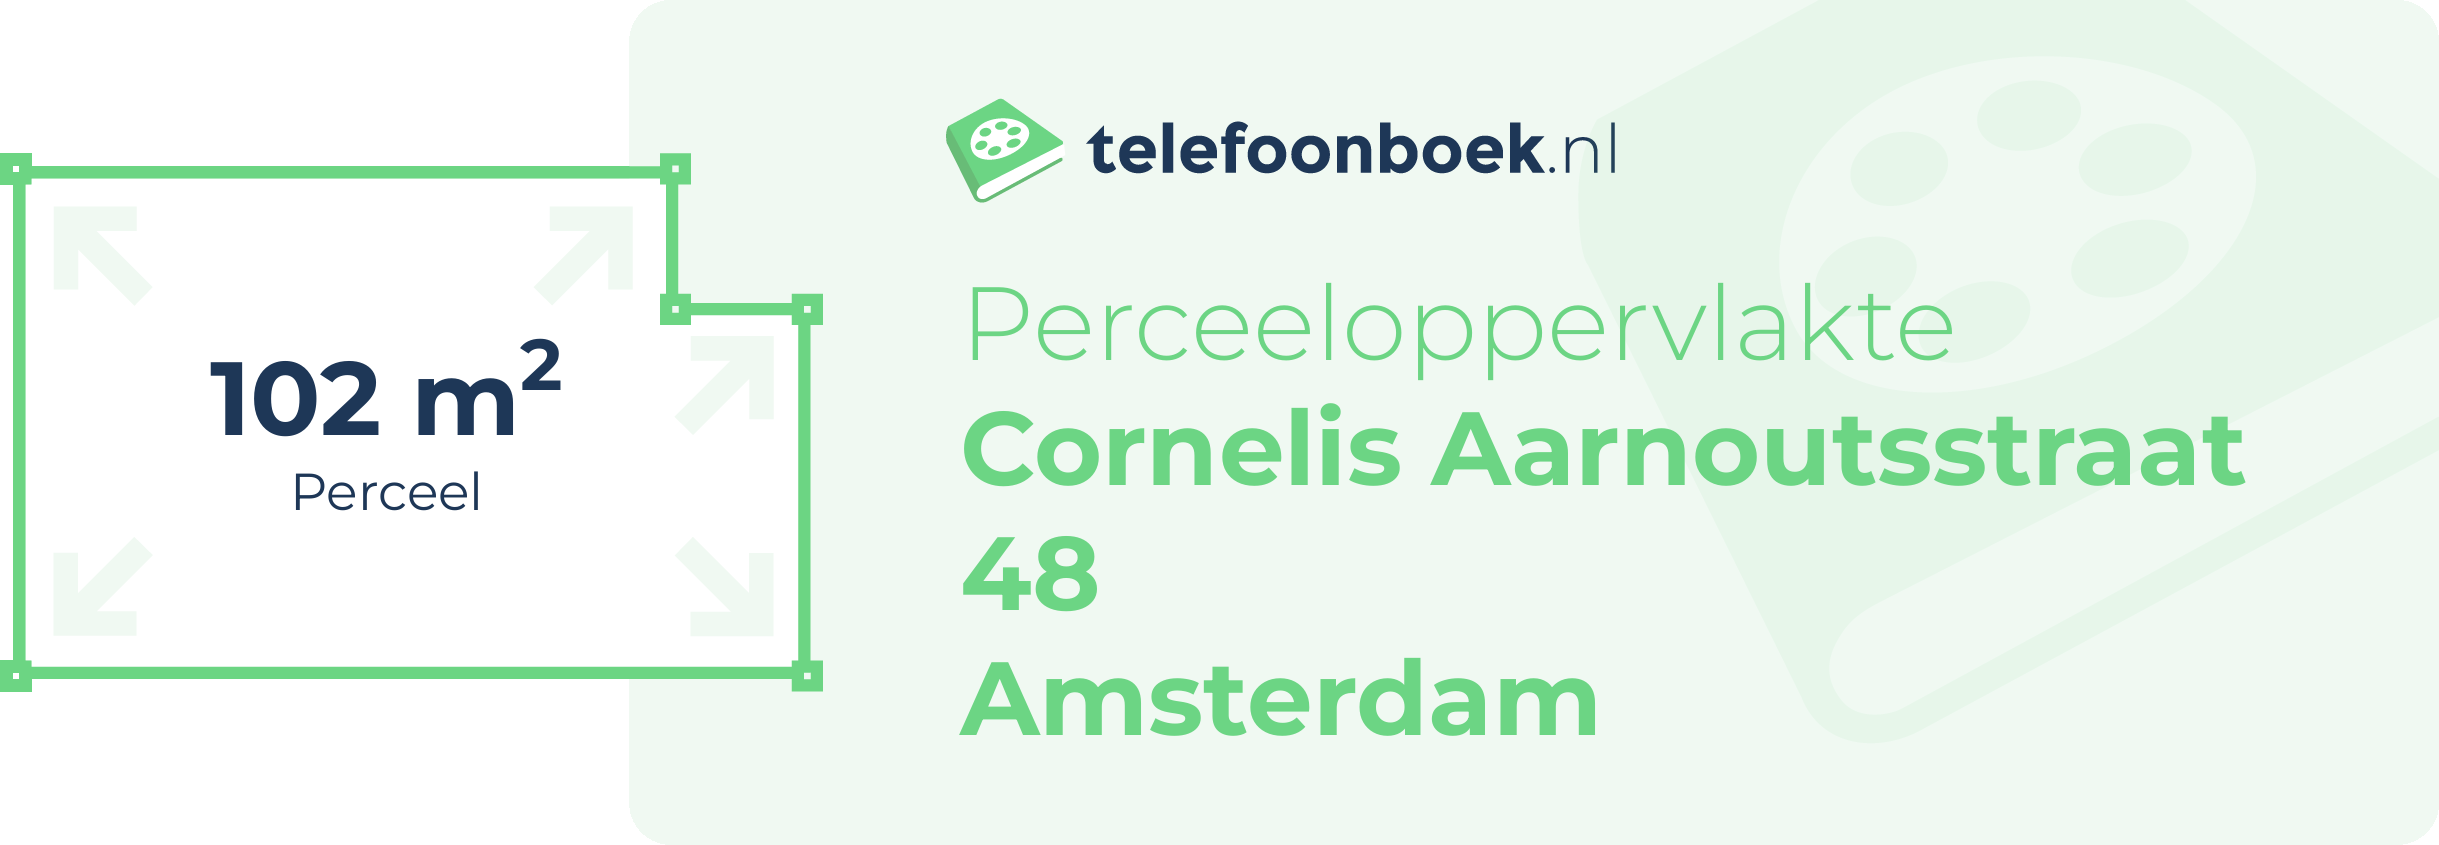 Perceeloppervlakte Cornelis Aarnoutsstraat 48 Amsterdam